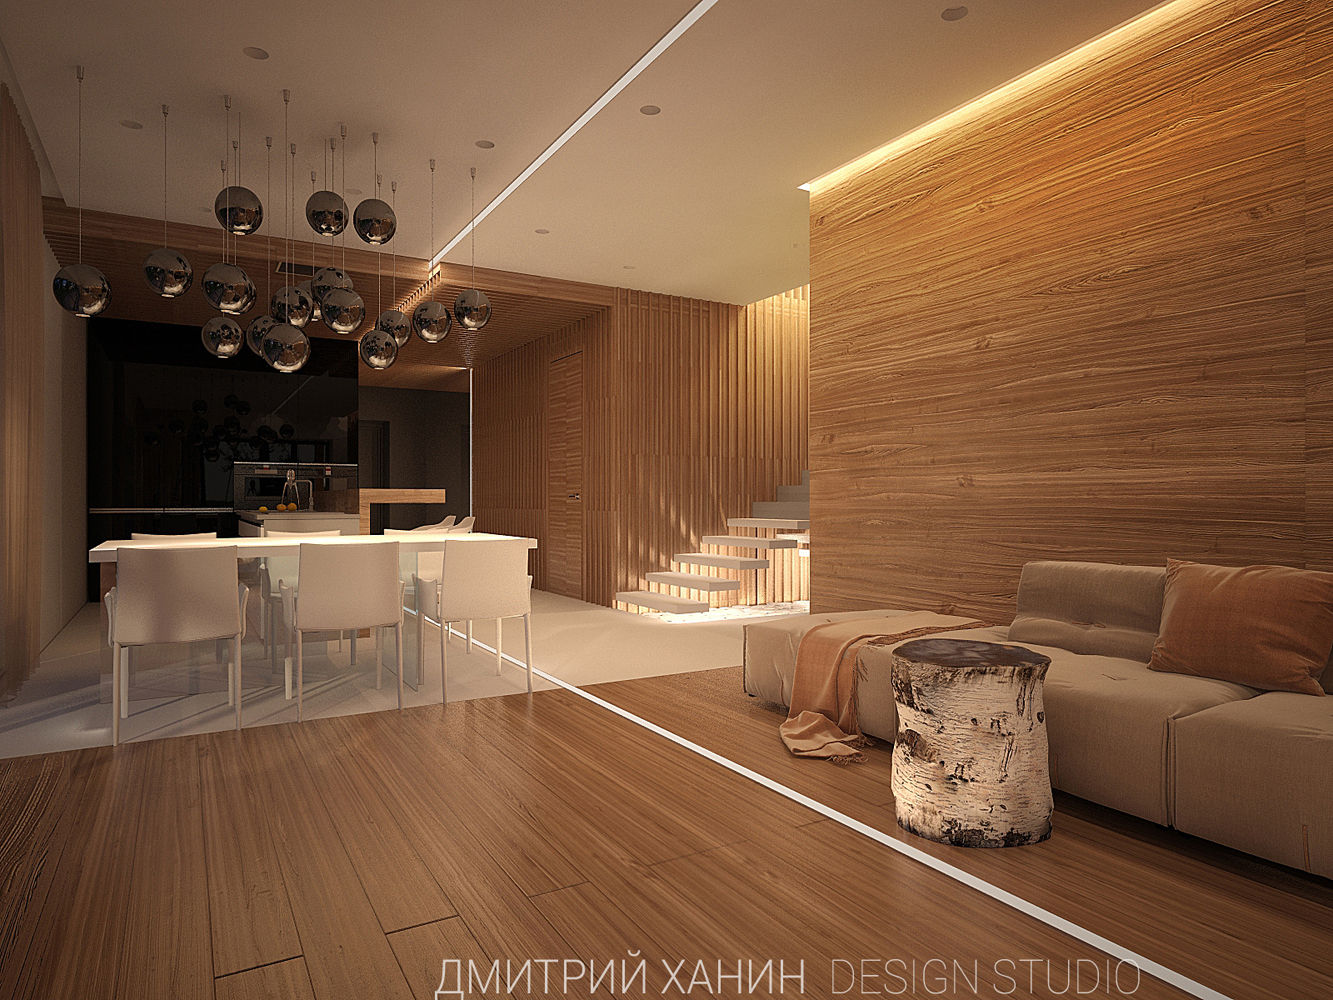 WoodHouse, Dmitriy Khanin Dmitriy Khanin Minimalistische Häuser Holz Holznachbildung